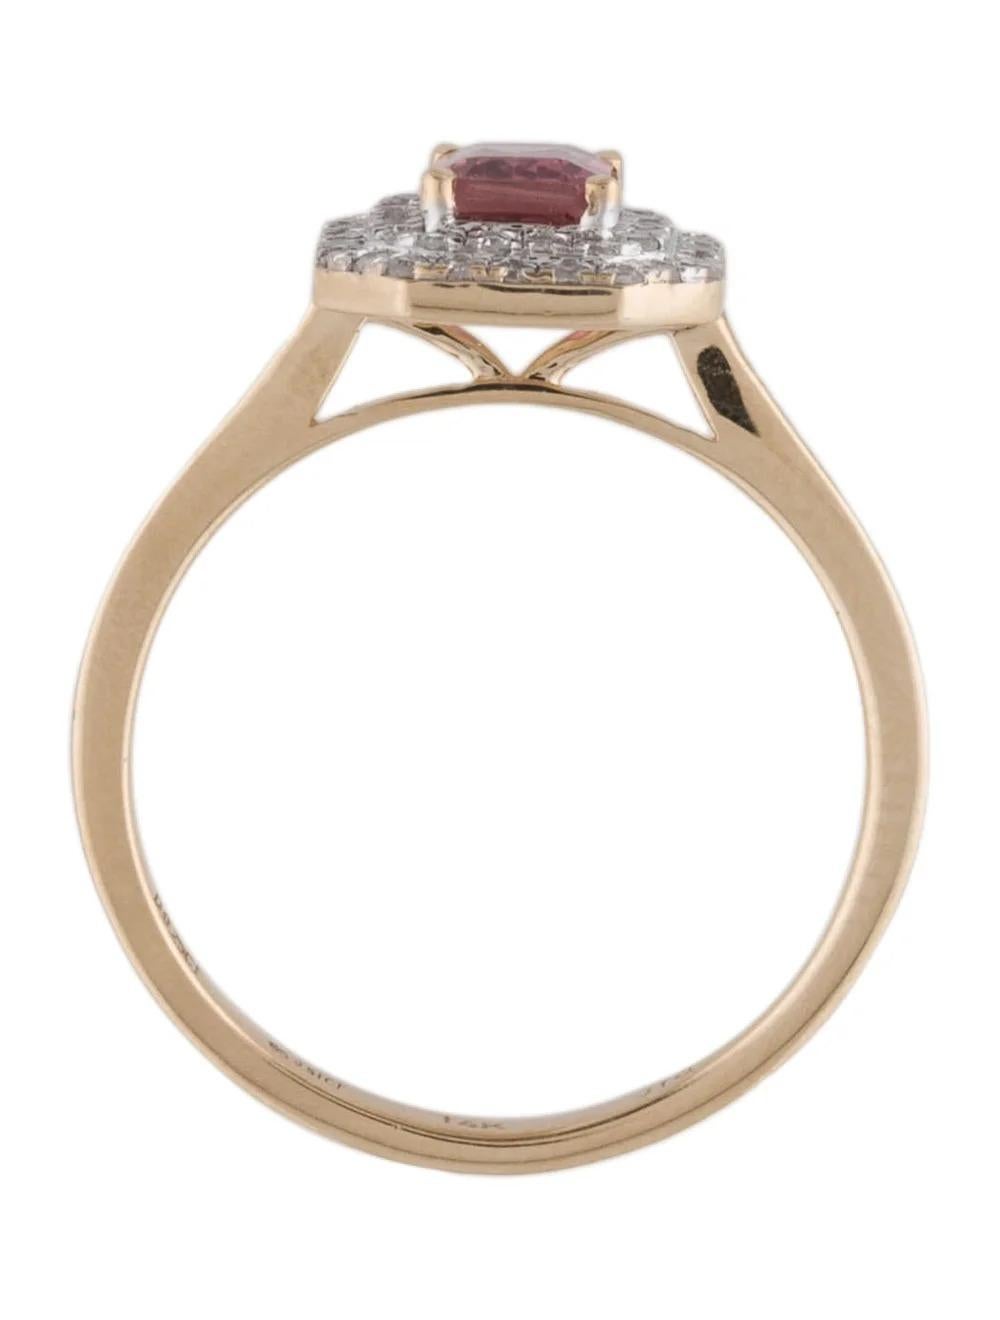 Women's 14K Tourmaline & Diamond Cocktail Ring, Size 6.5 - Stunning Gemstones Jewelry For Sale